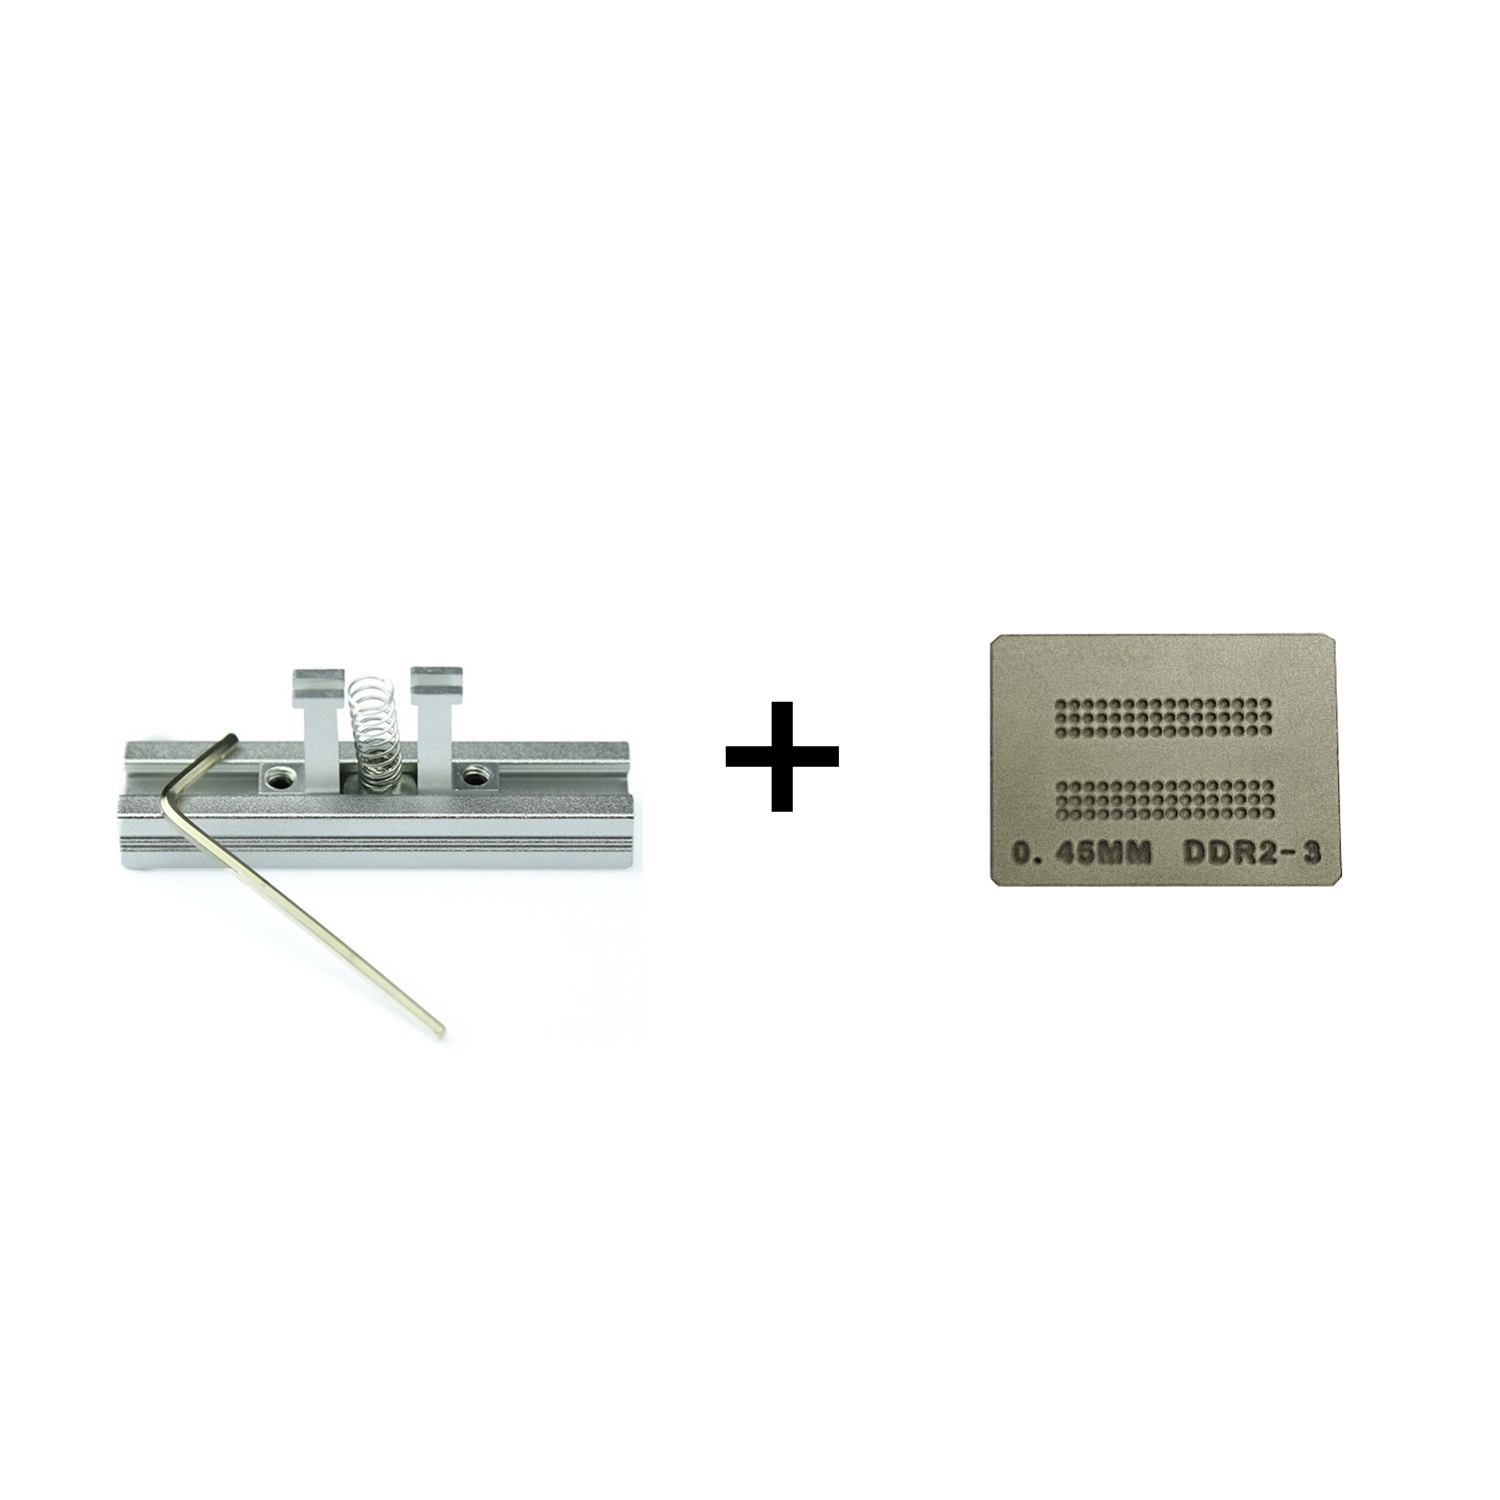 Kit stencil PS4 DDR2-3 Bga Calor Direto Reballing GM30 + suporte